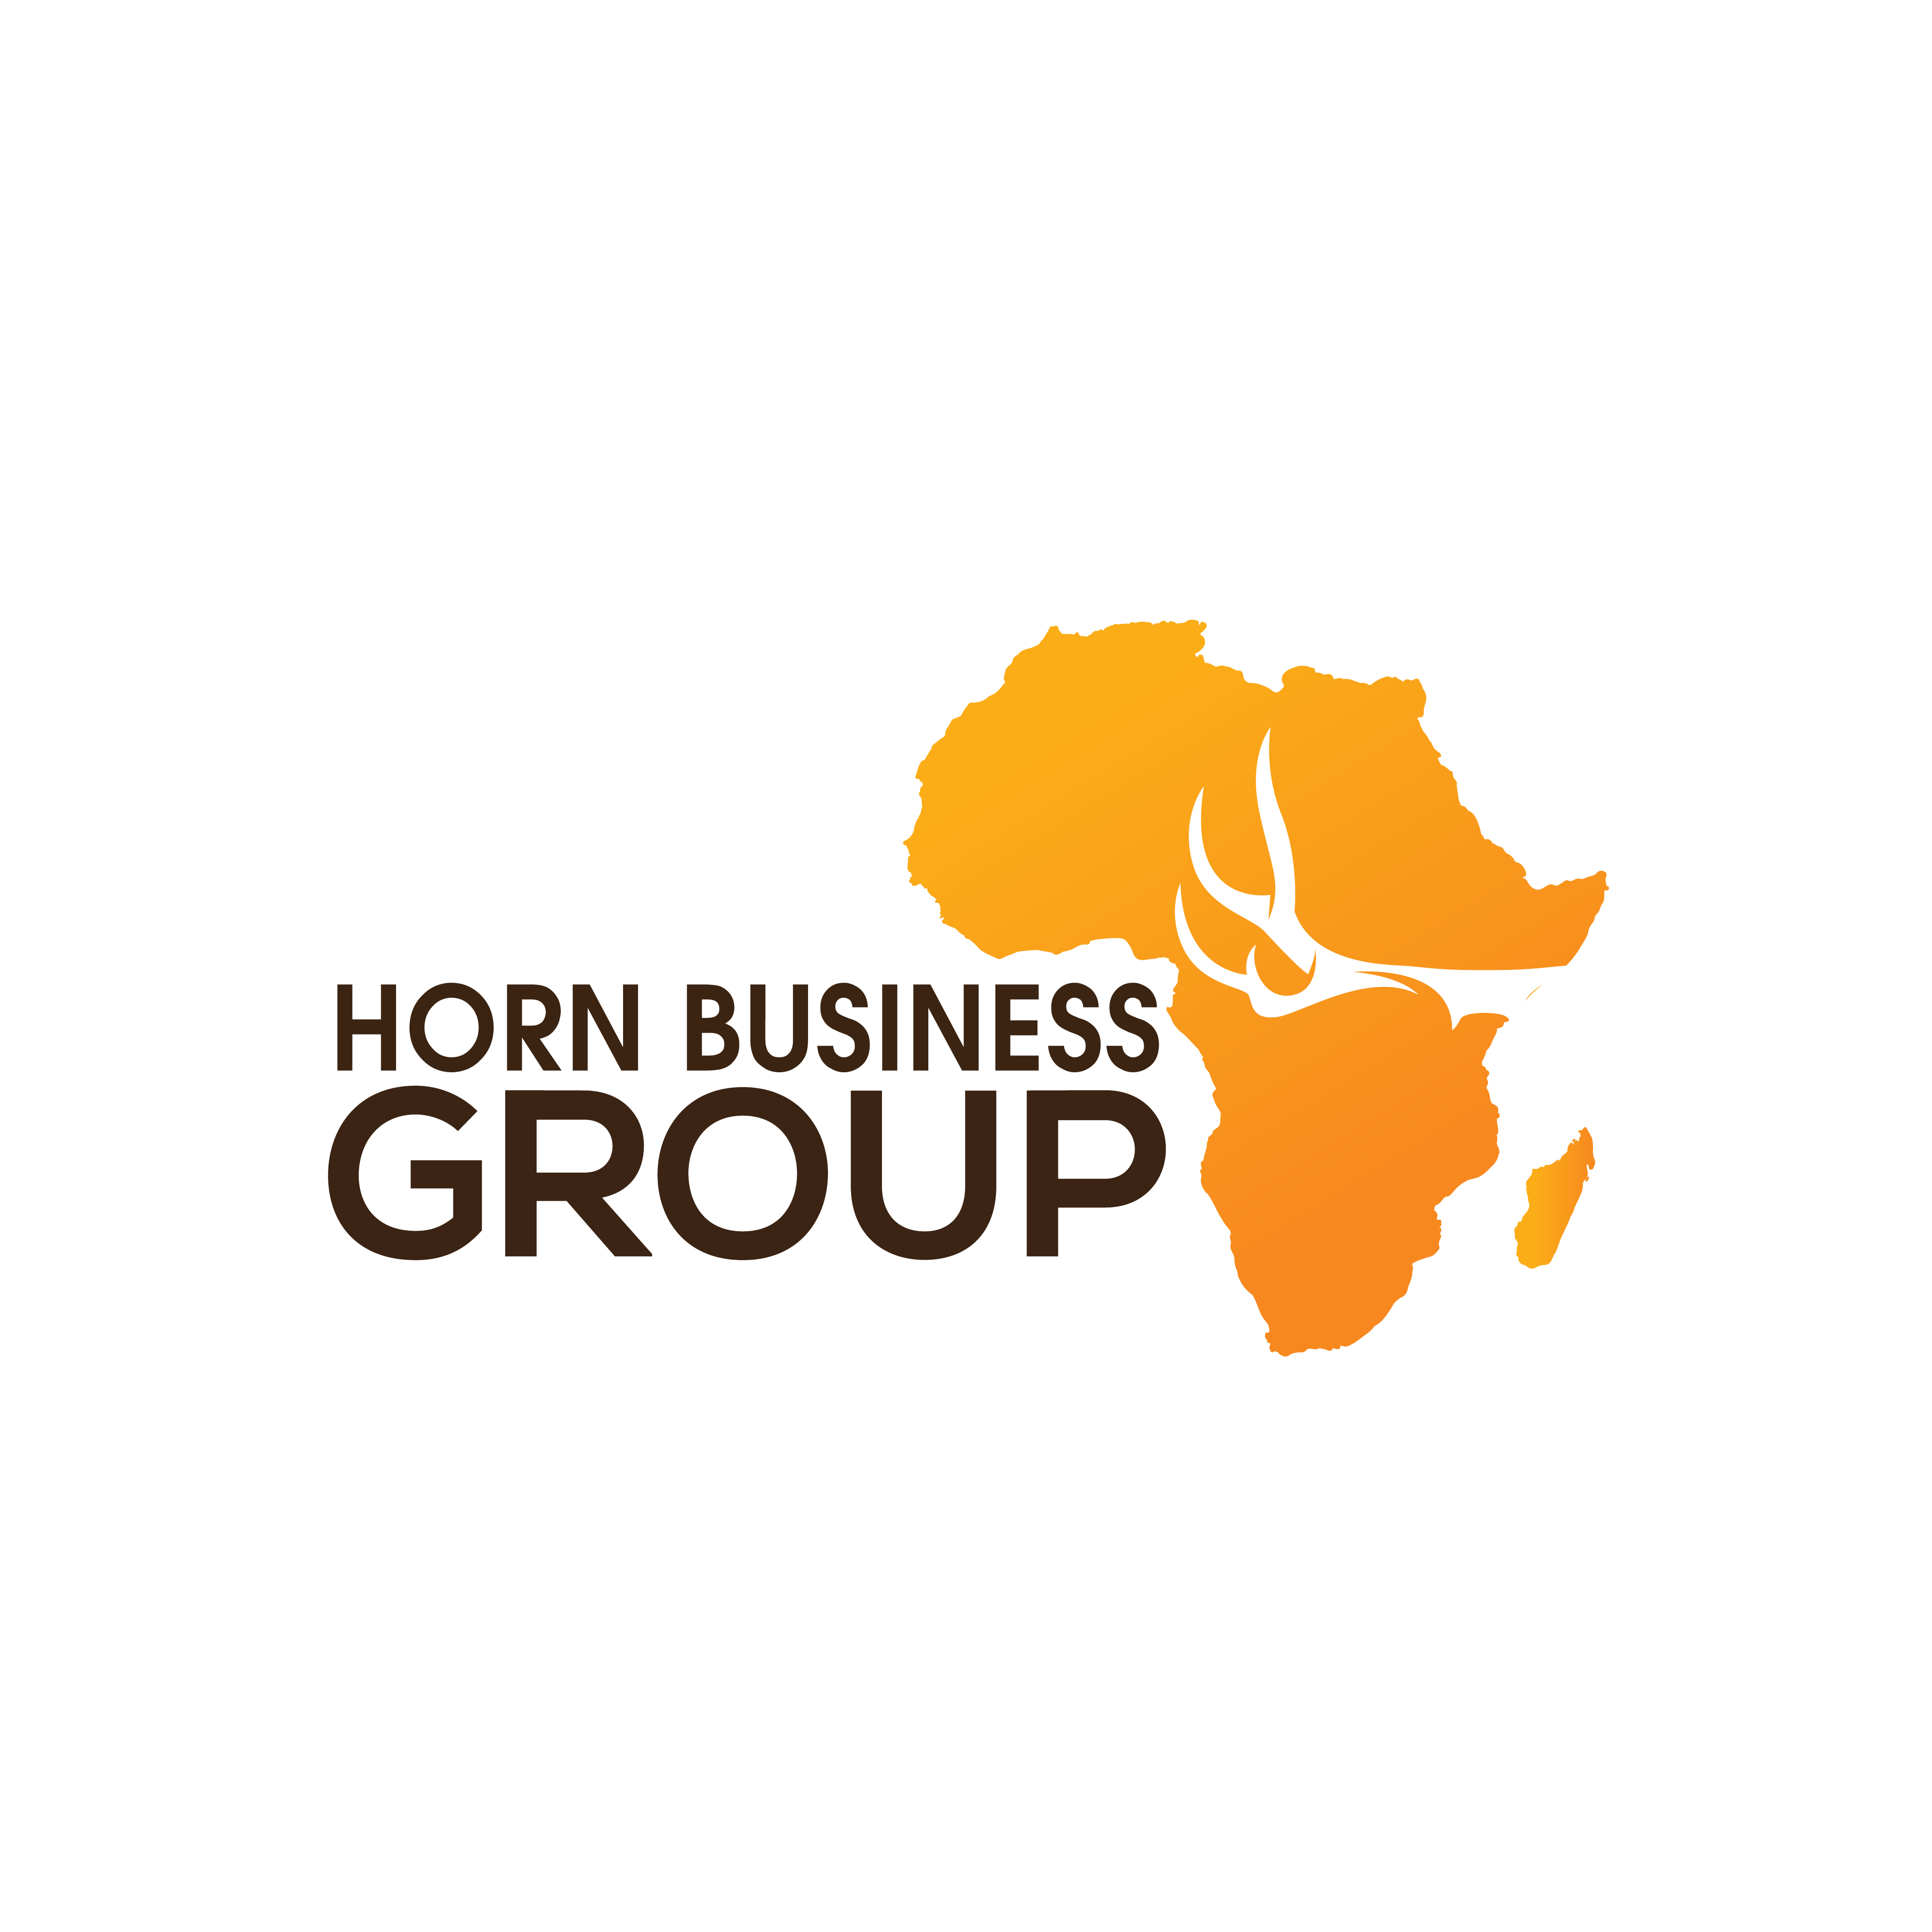 Horn Business Group